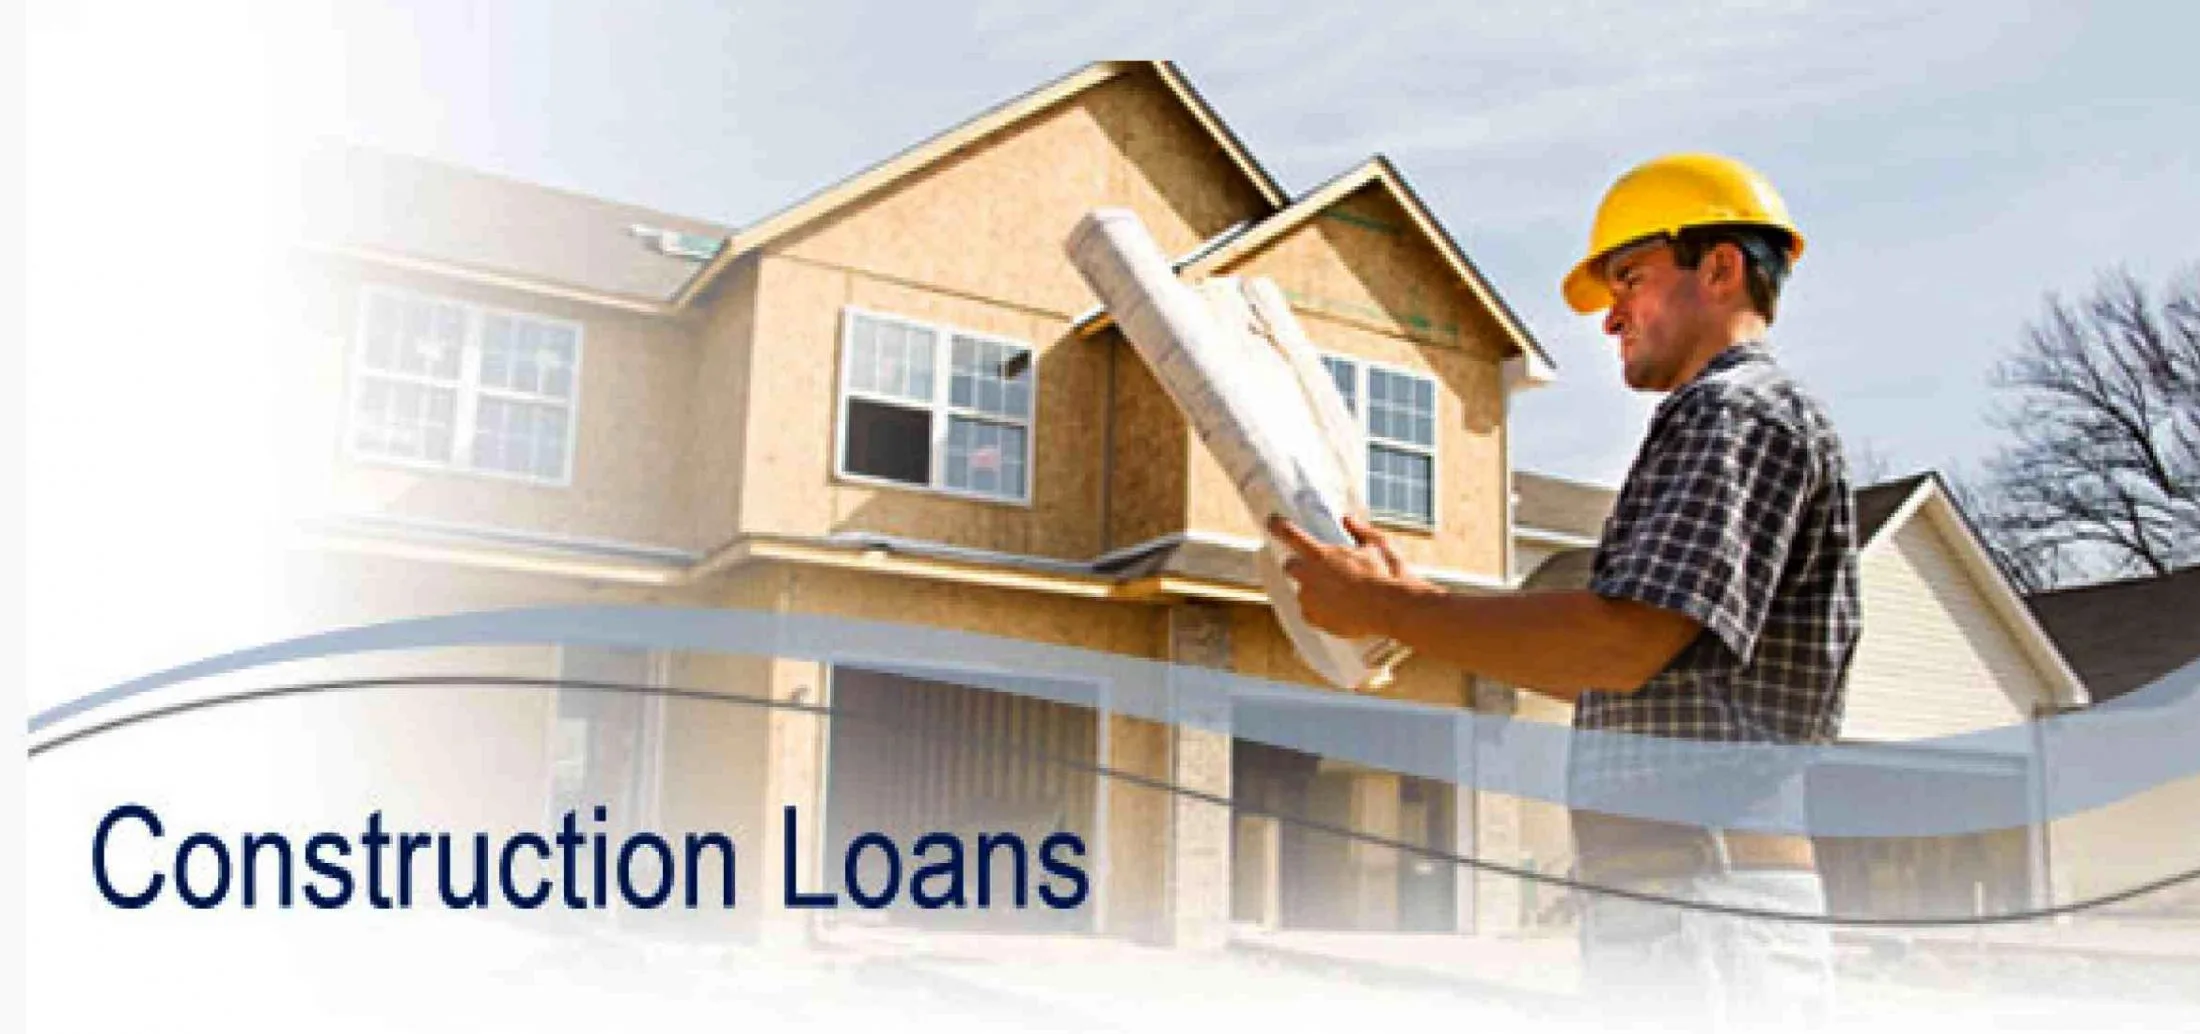 Construction loan